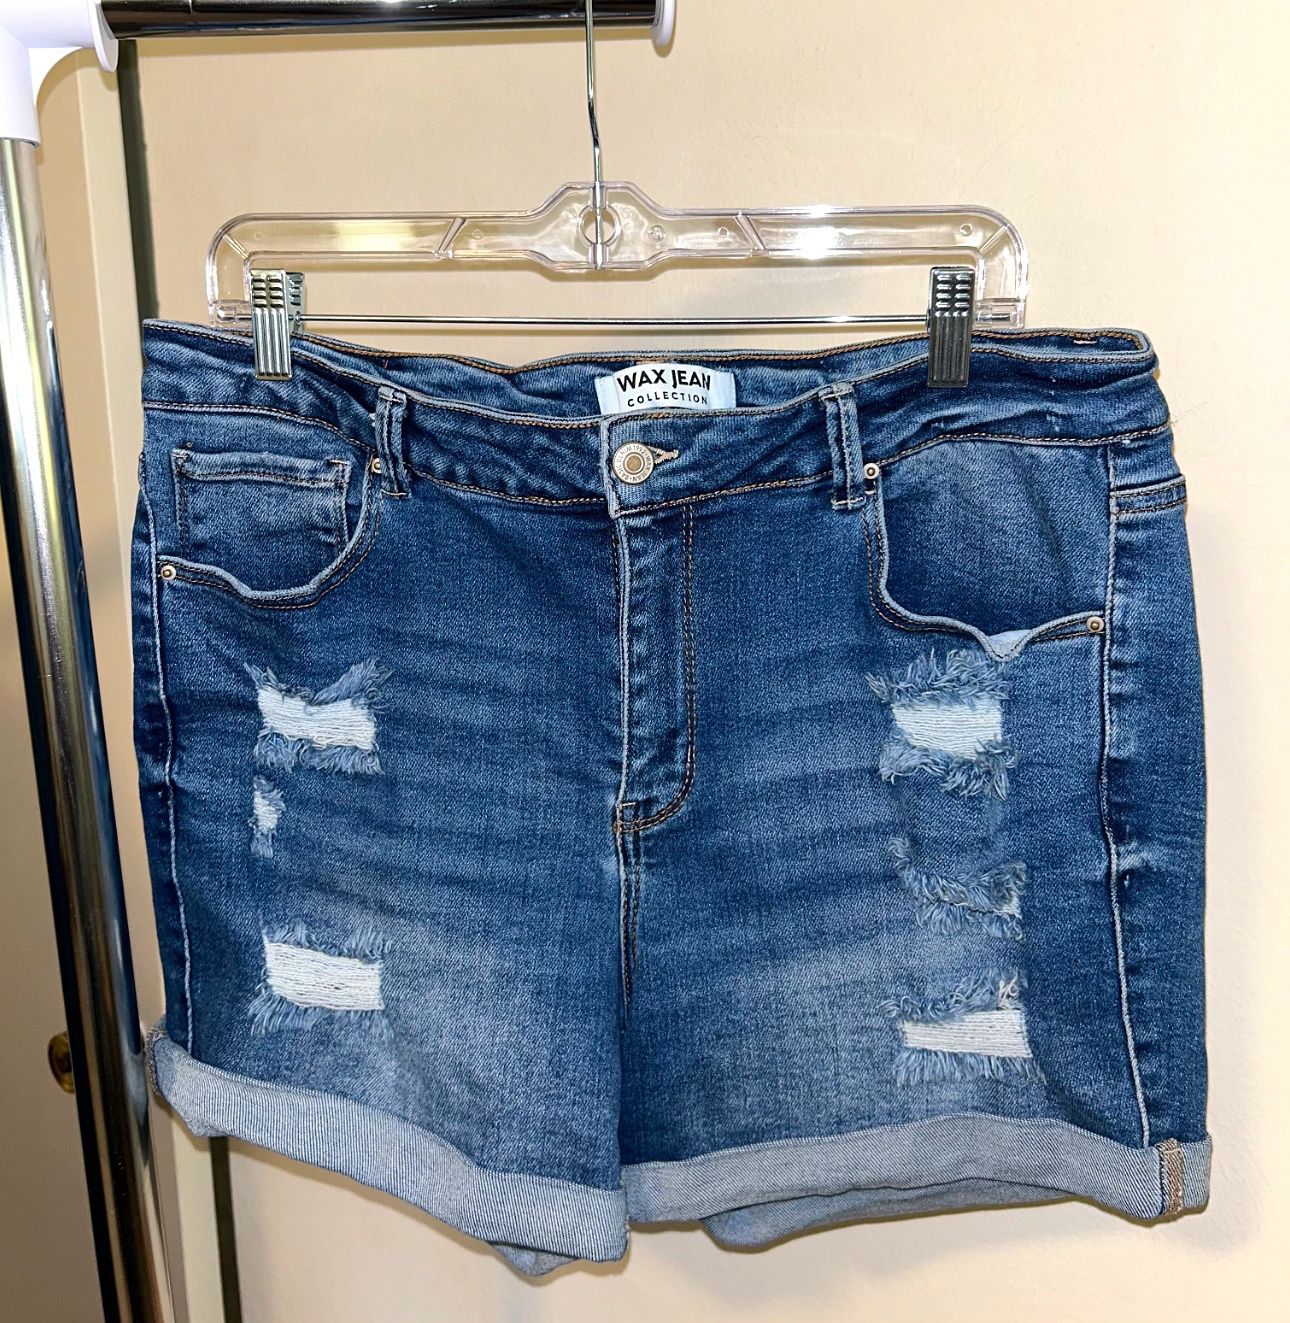 Wax Jean Brand Ripped Jean Shorts Size 2X